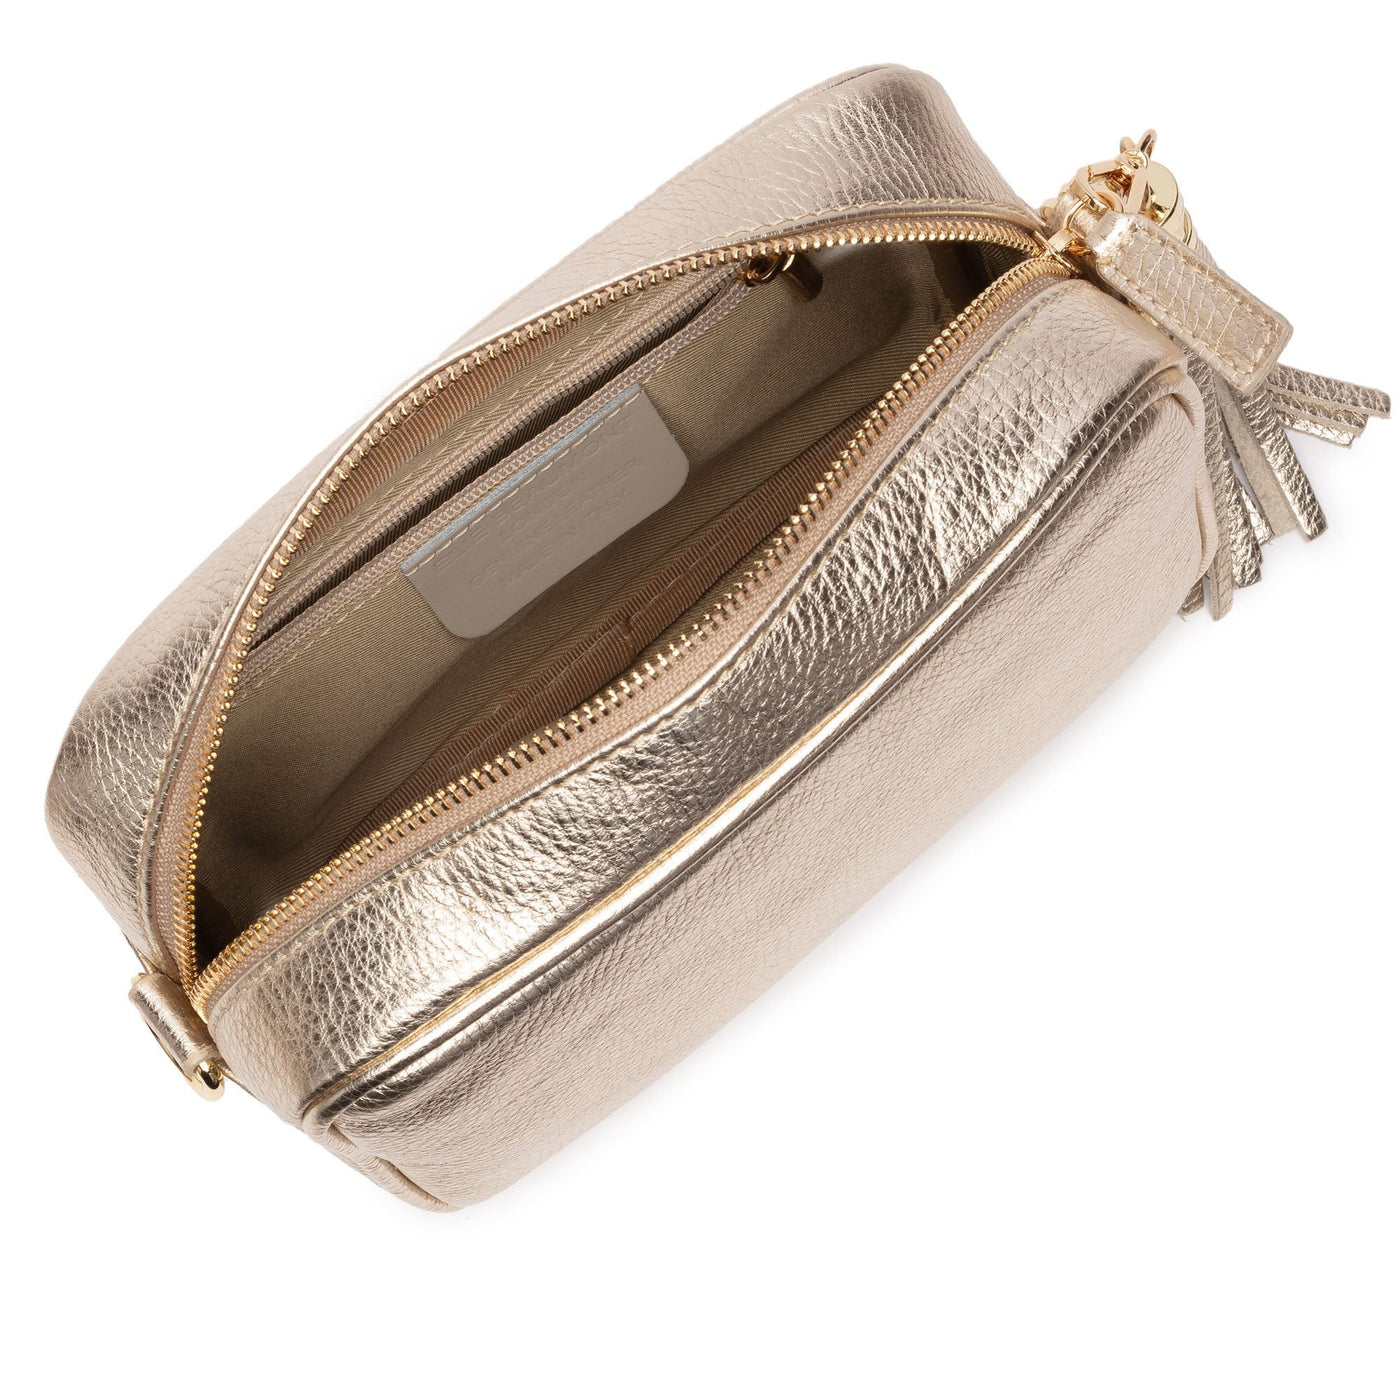 Elie Beaumont Designer Leather Crossbody Bag - Metallic Gold (GOLD Fittings)